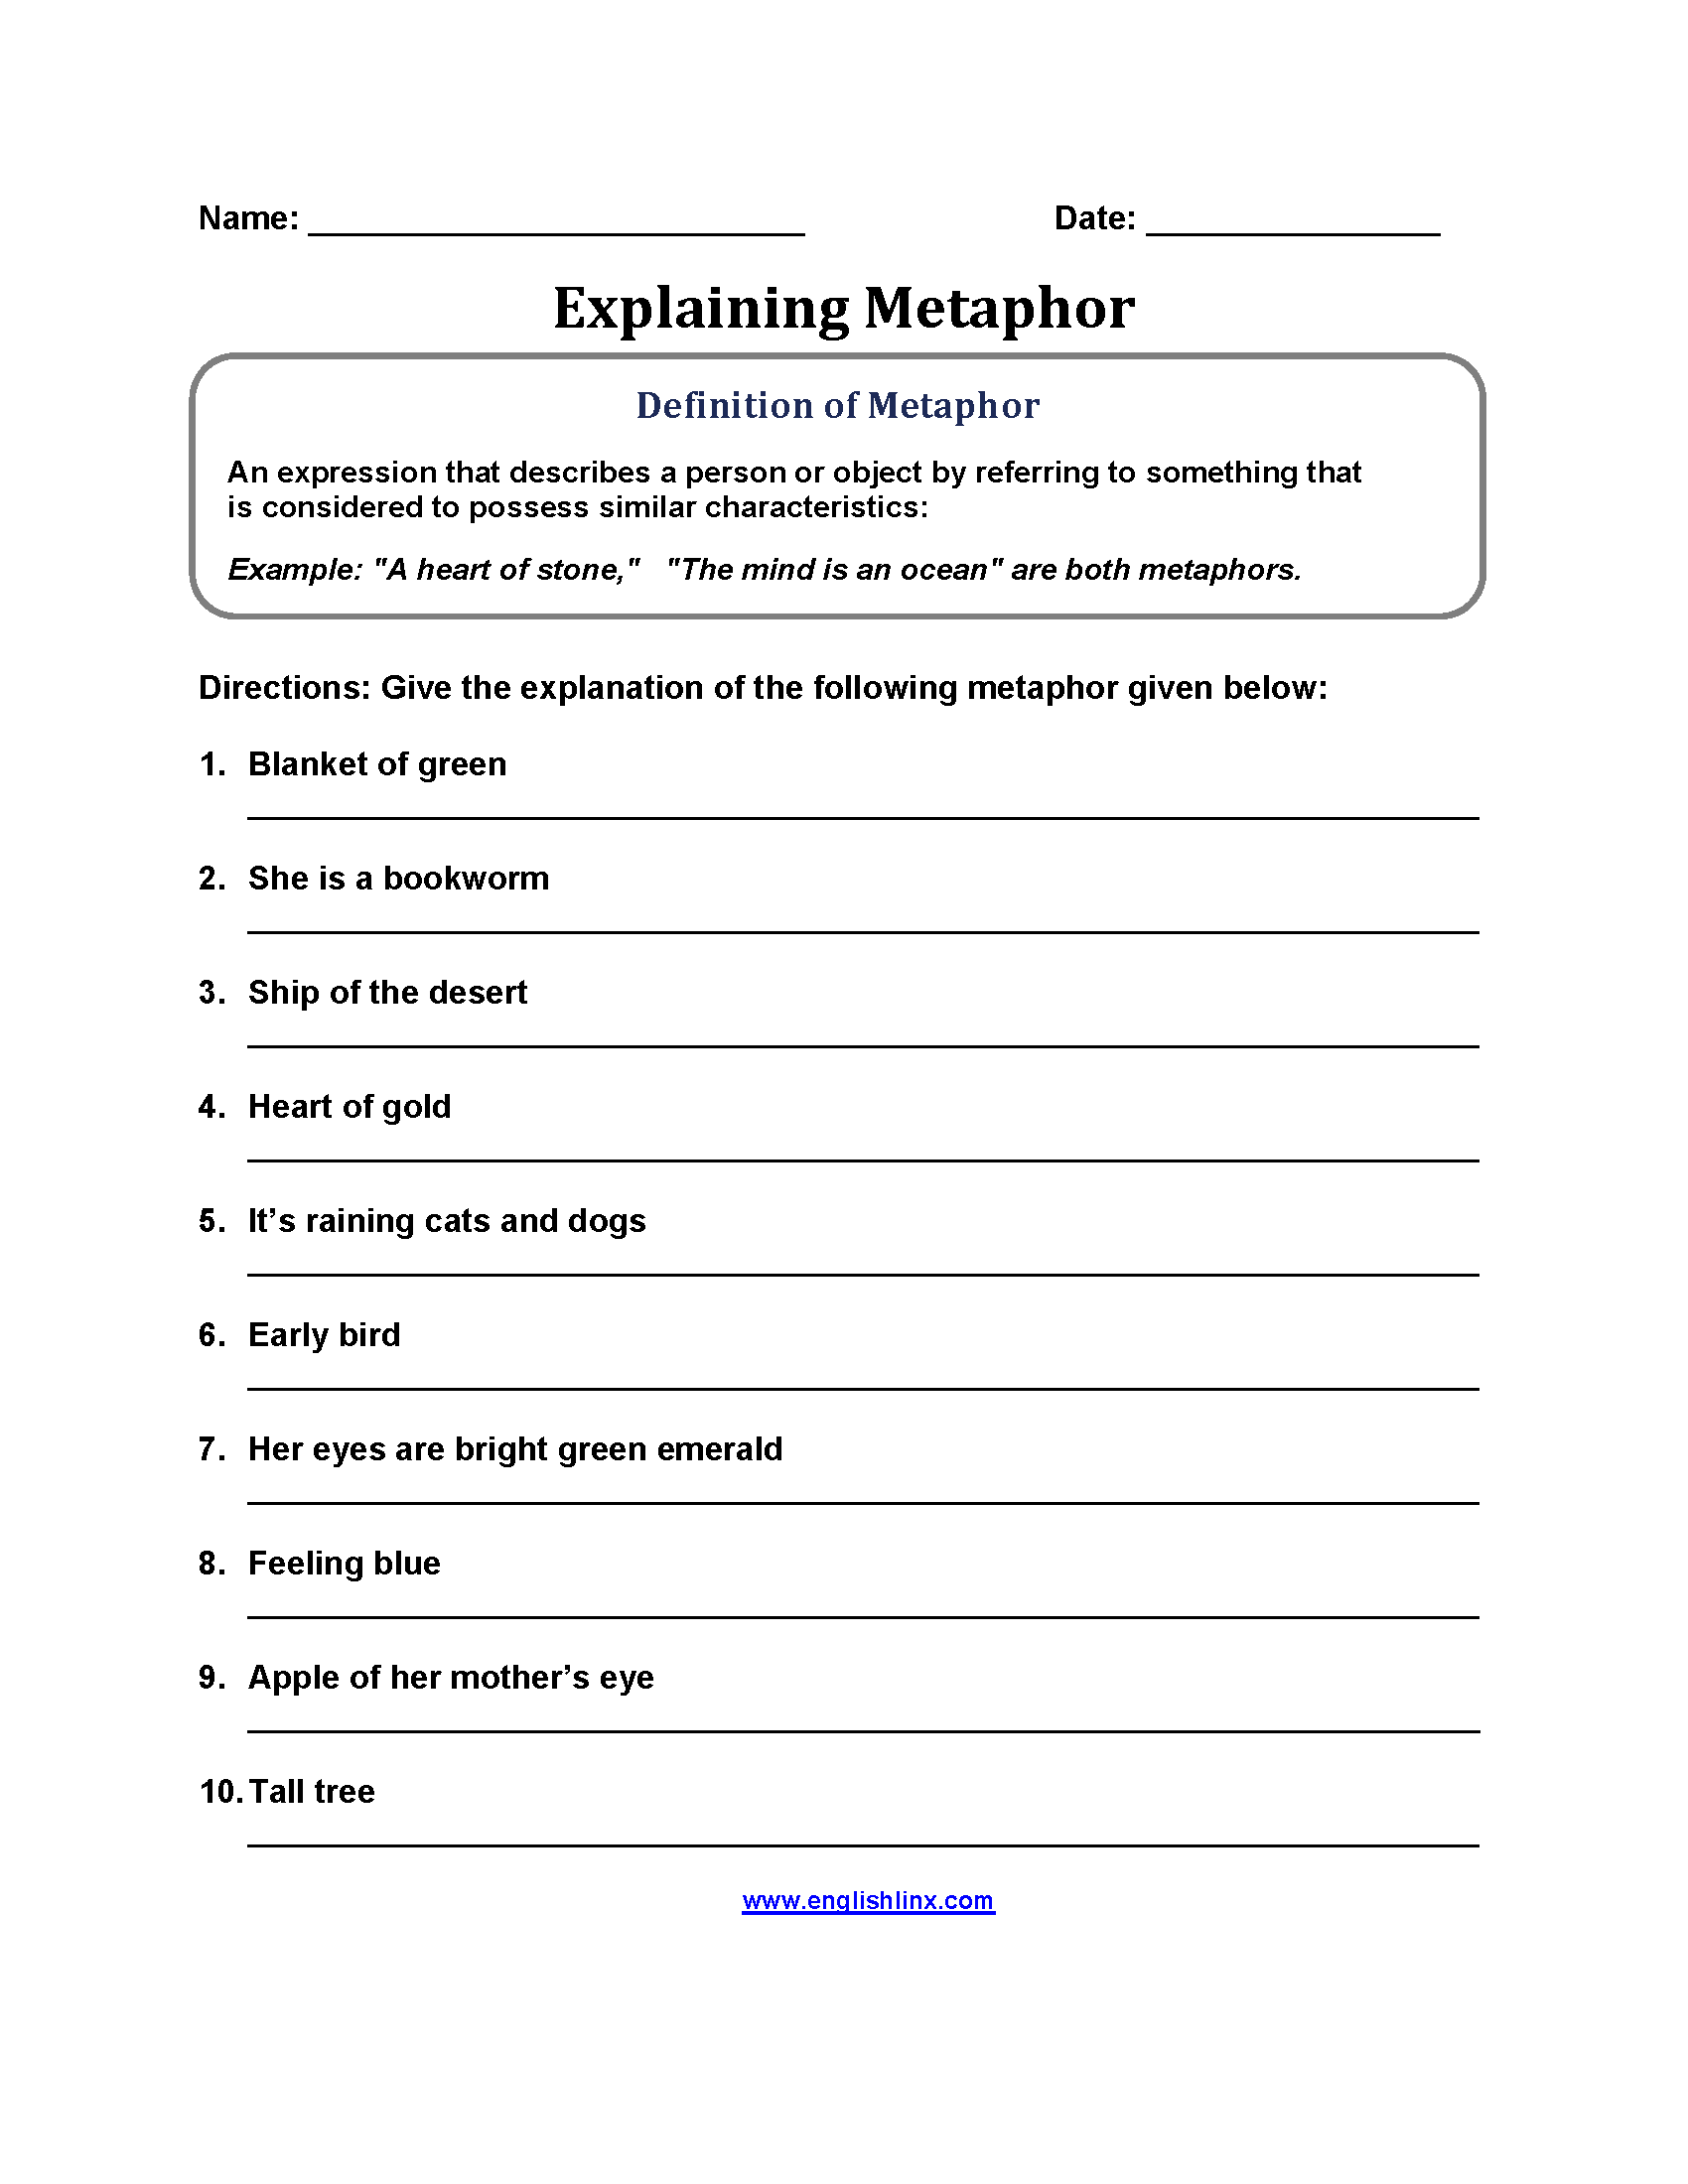 Metaphor Explaining Worksheets